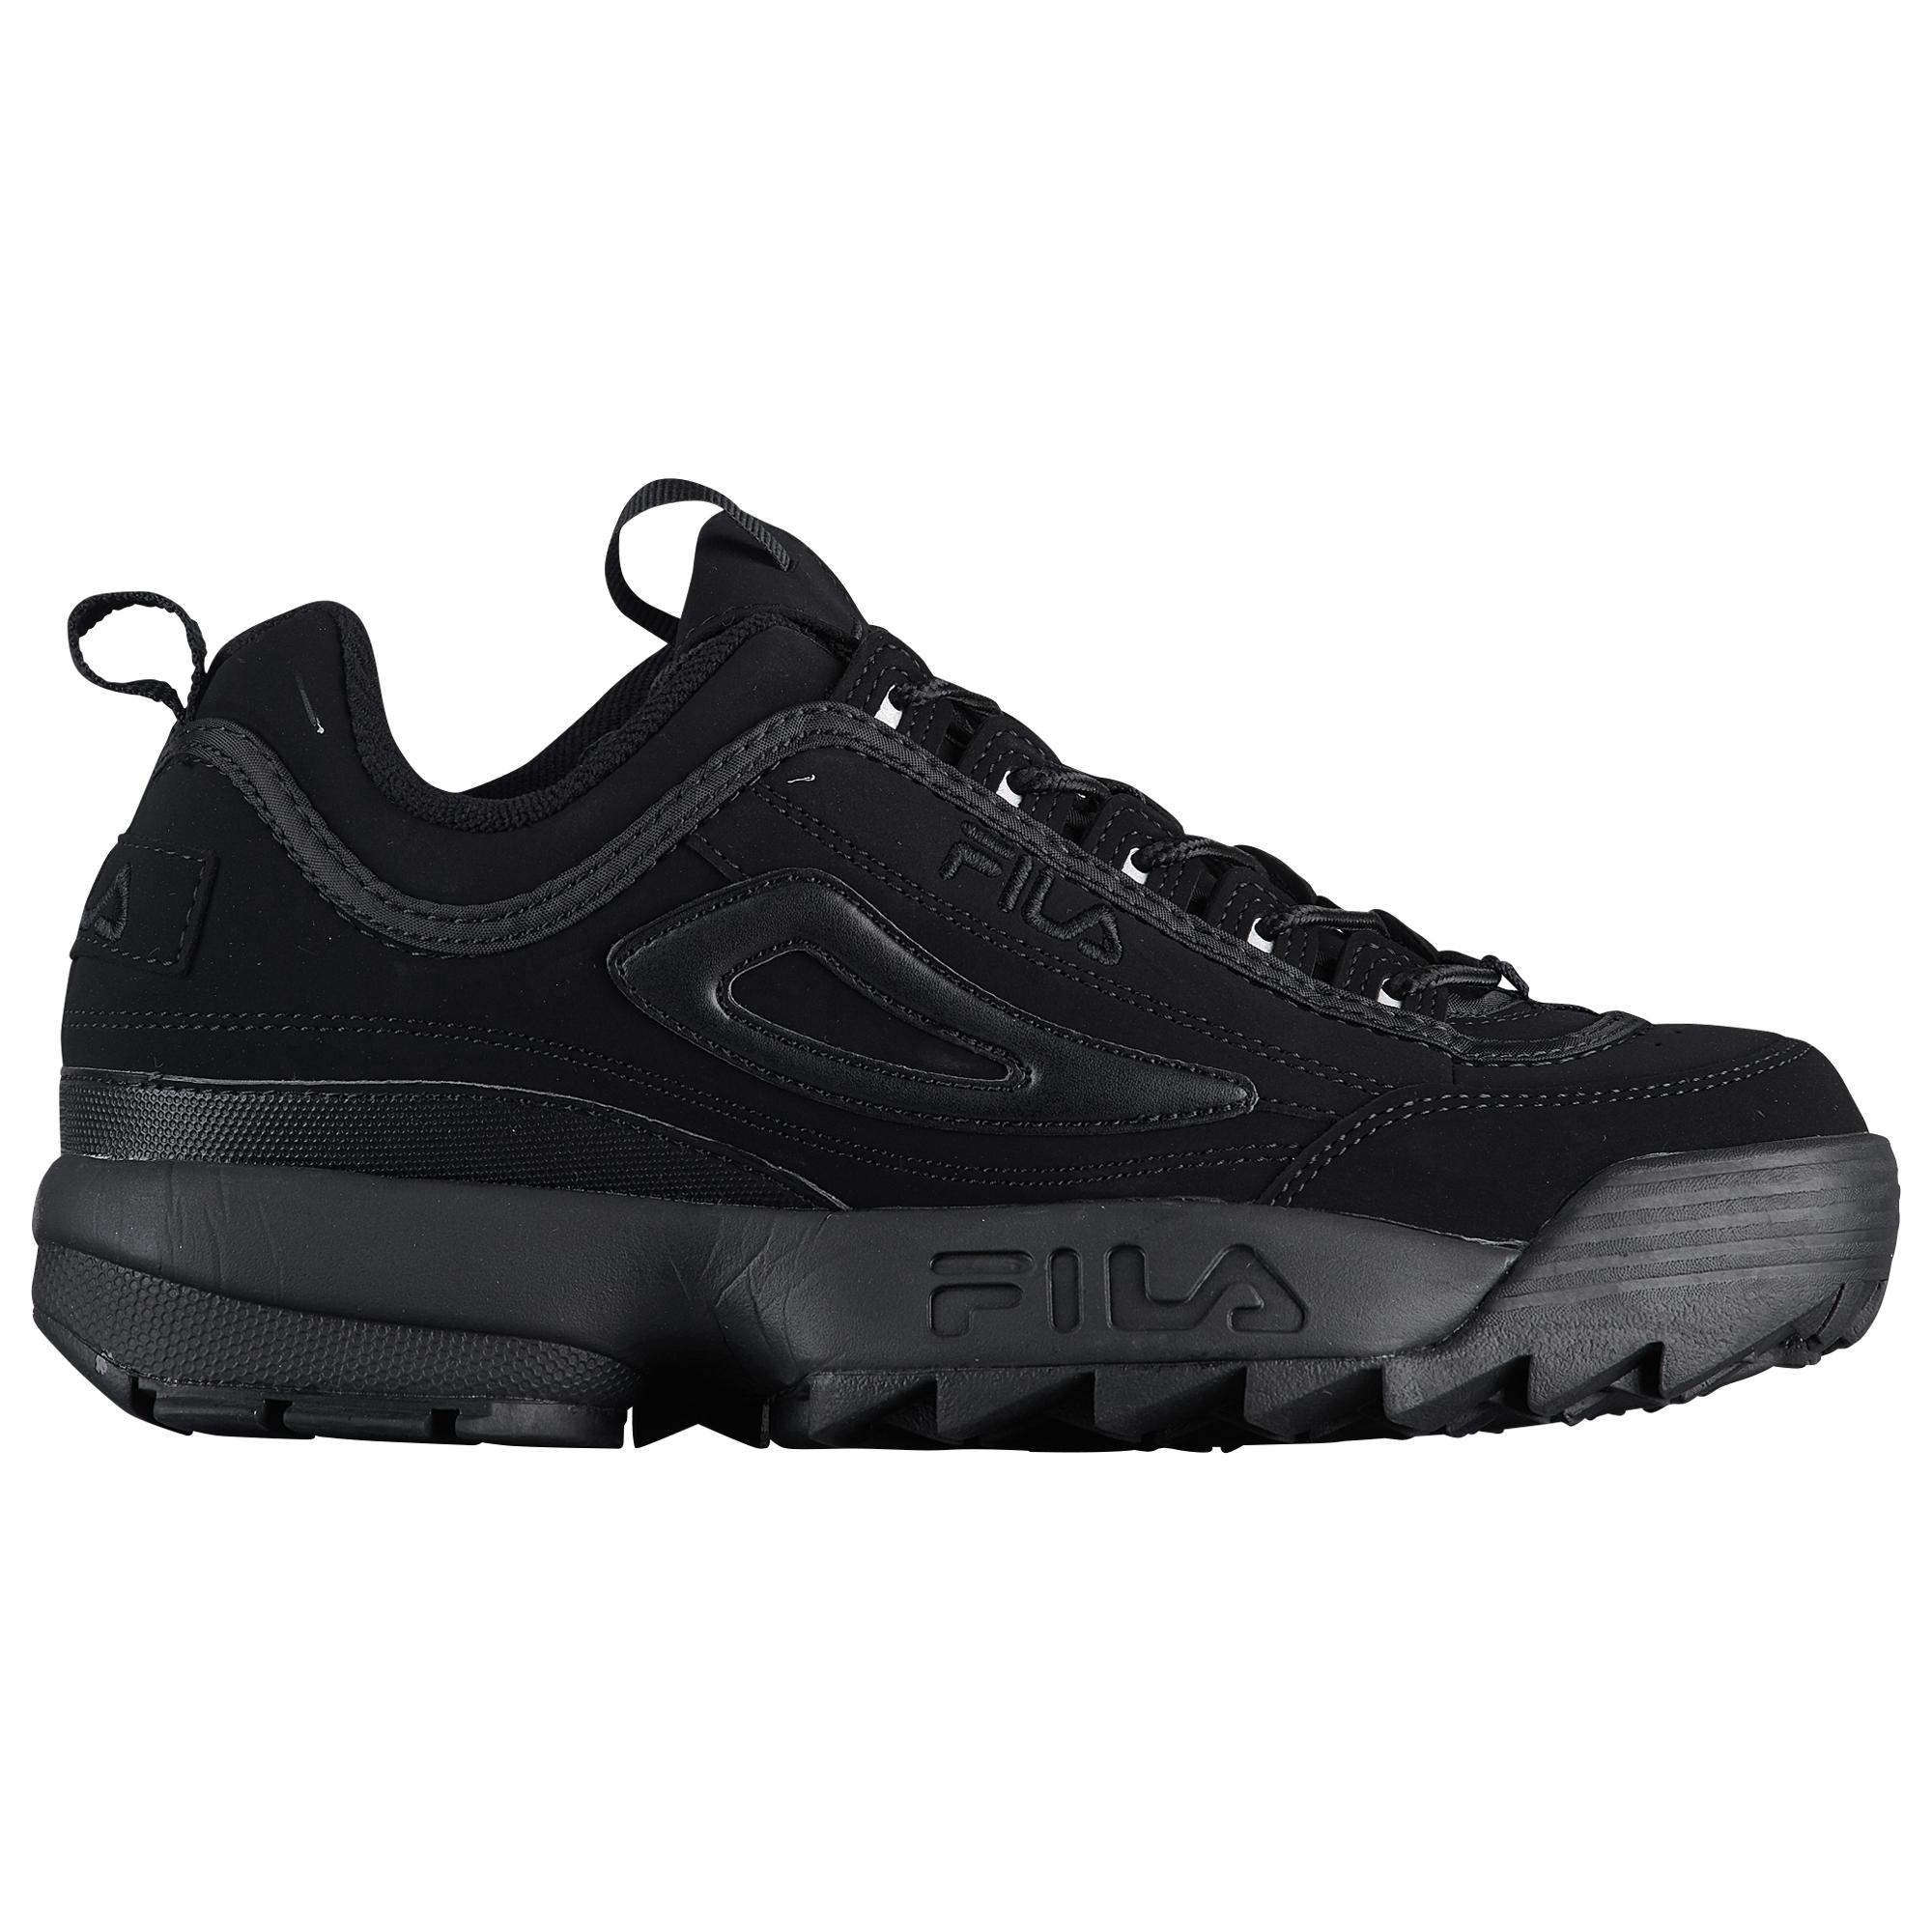 Fila Leather Disruptor Ii Training Shoes in Black/Black/Black (Black ...